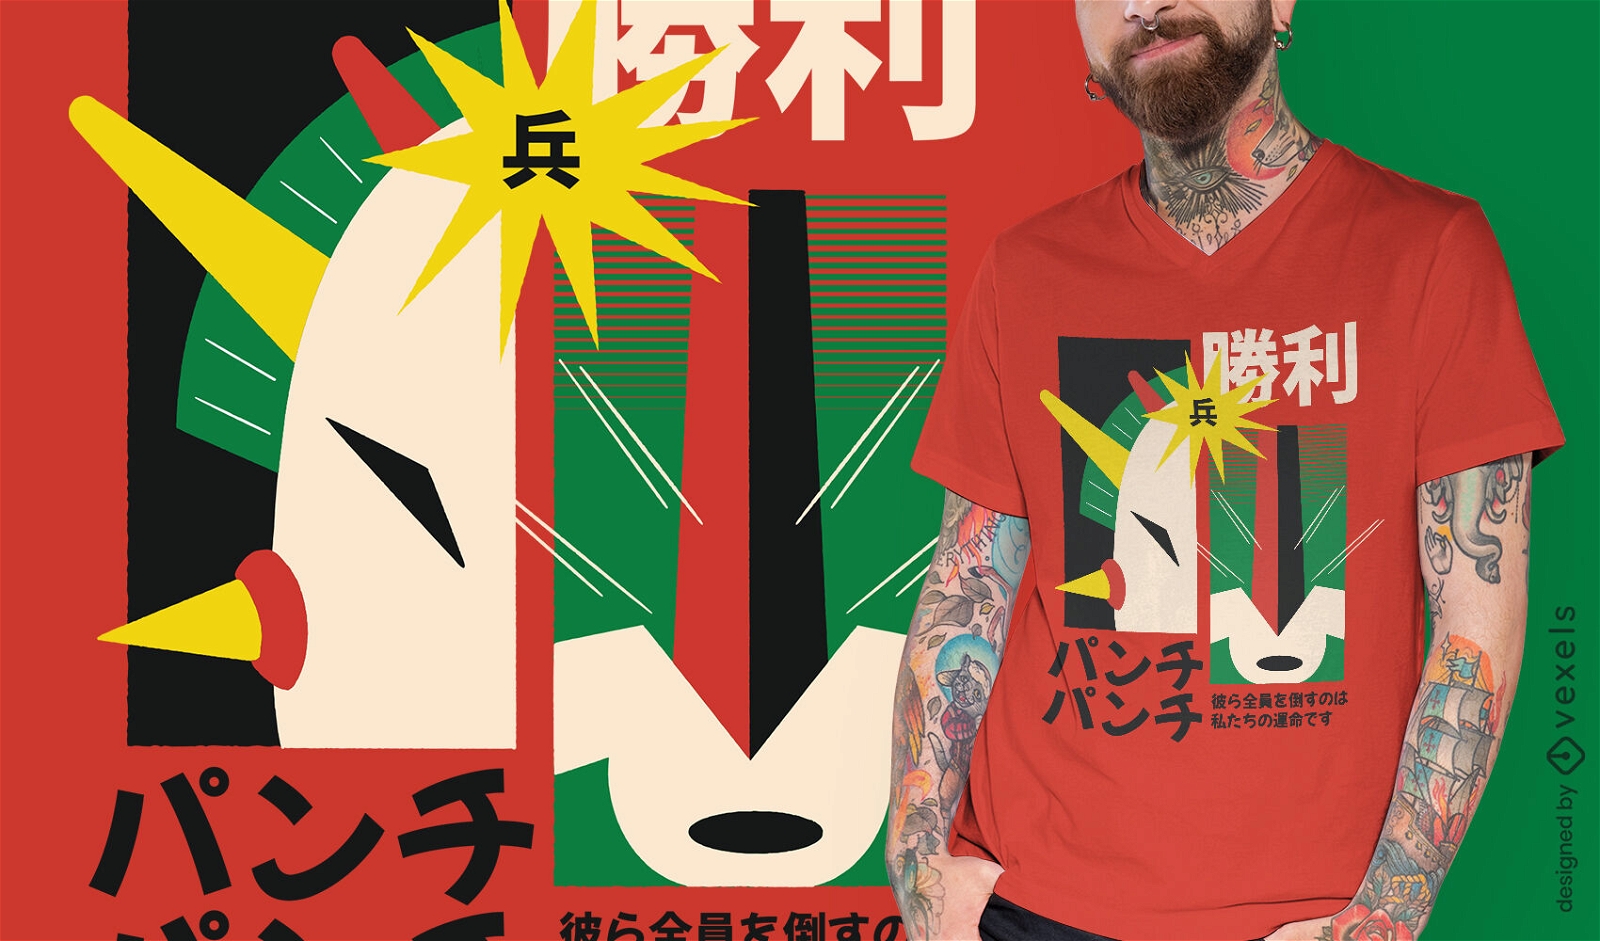 Japanisches Roboterillustrations-T-Shirt Design